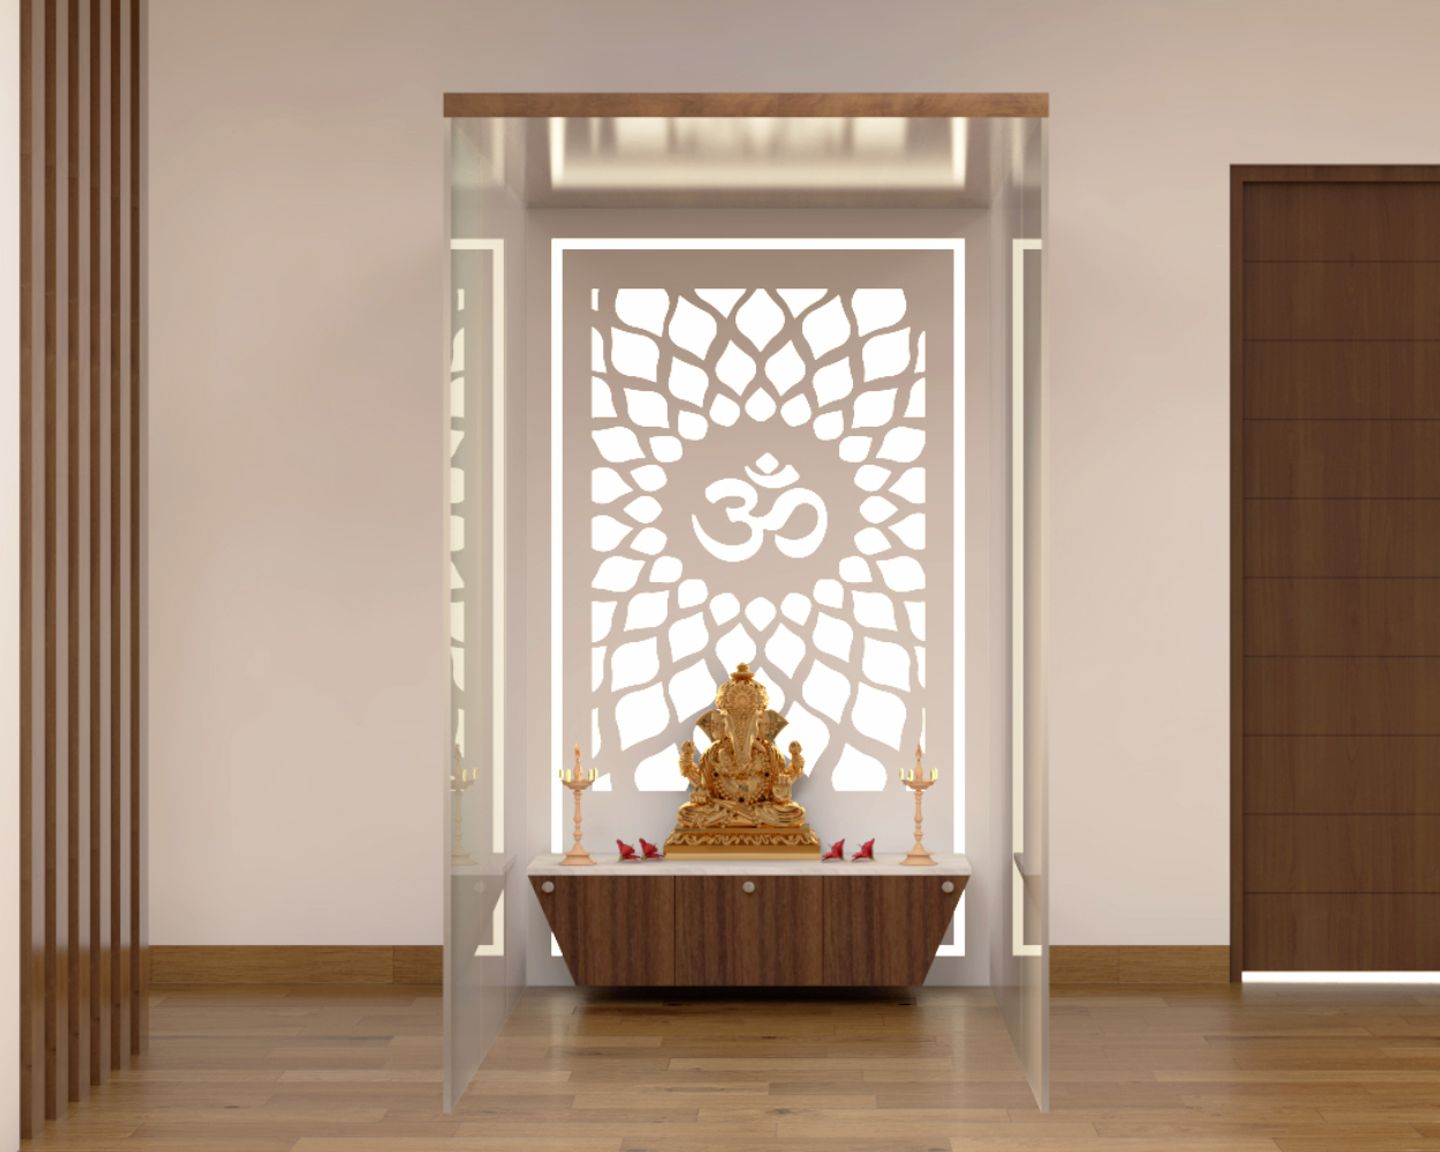 Walnut Toned Mandir Design With Om Mandala Wall - Livspace